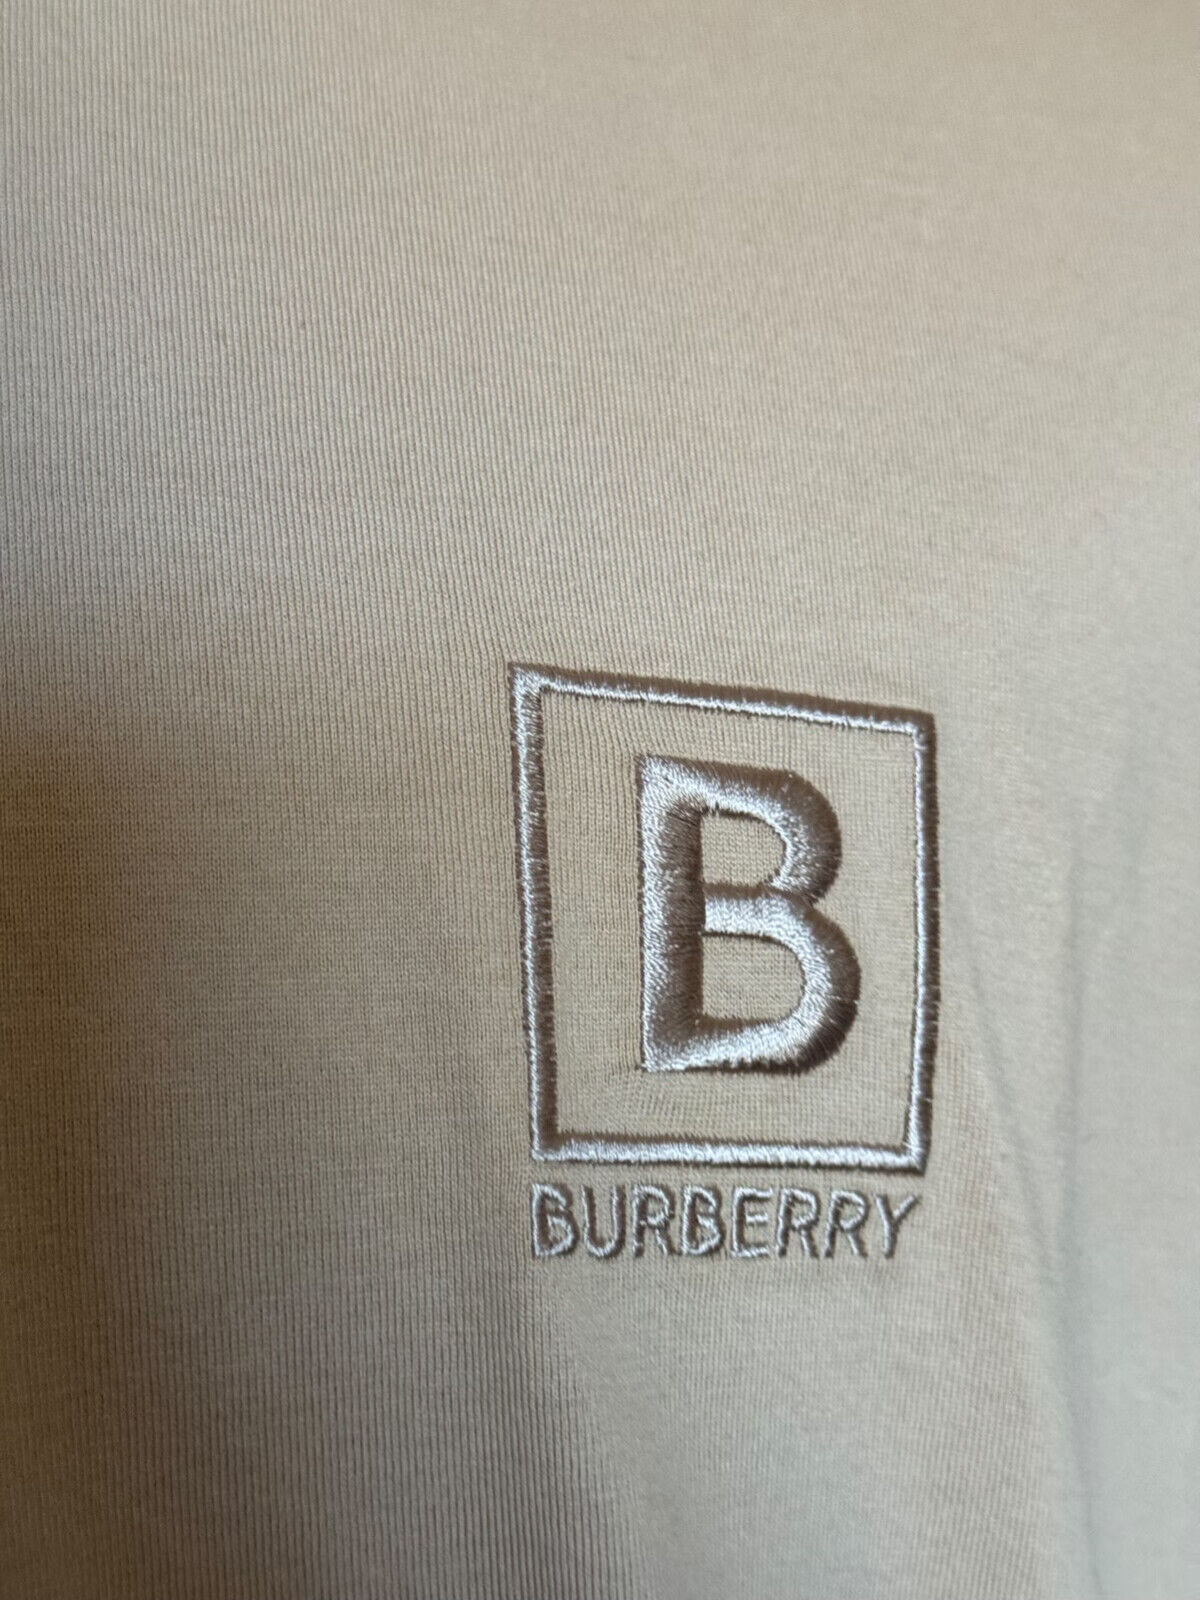 NWT $580 Burberry Logo Men's Beige Plaid Cotton T-shirt XL (Oversized) 8067071